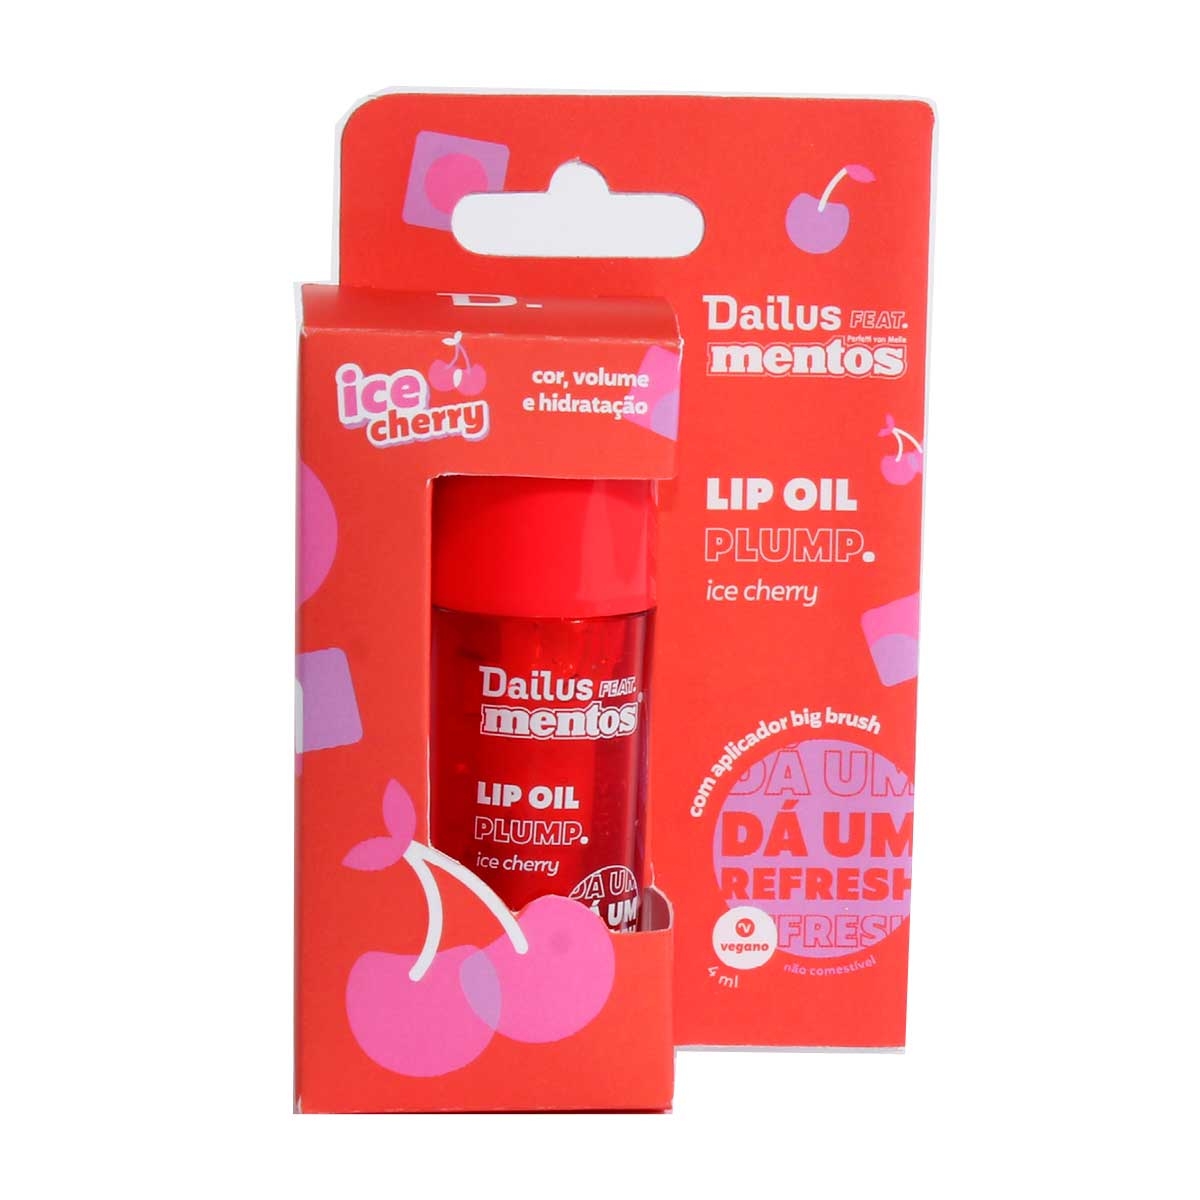 Gloss Labial Lip Oil Plump Ice Dailus feat Mentos 4ml - Cherry